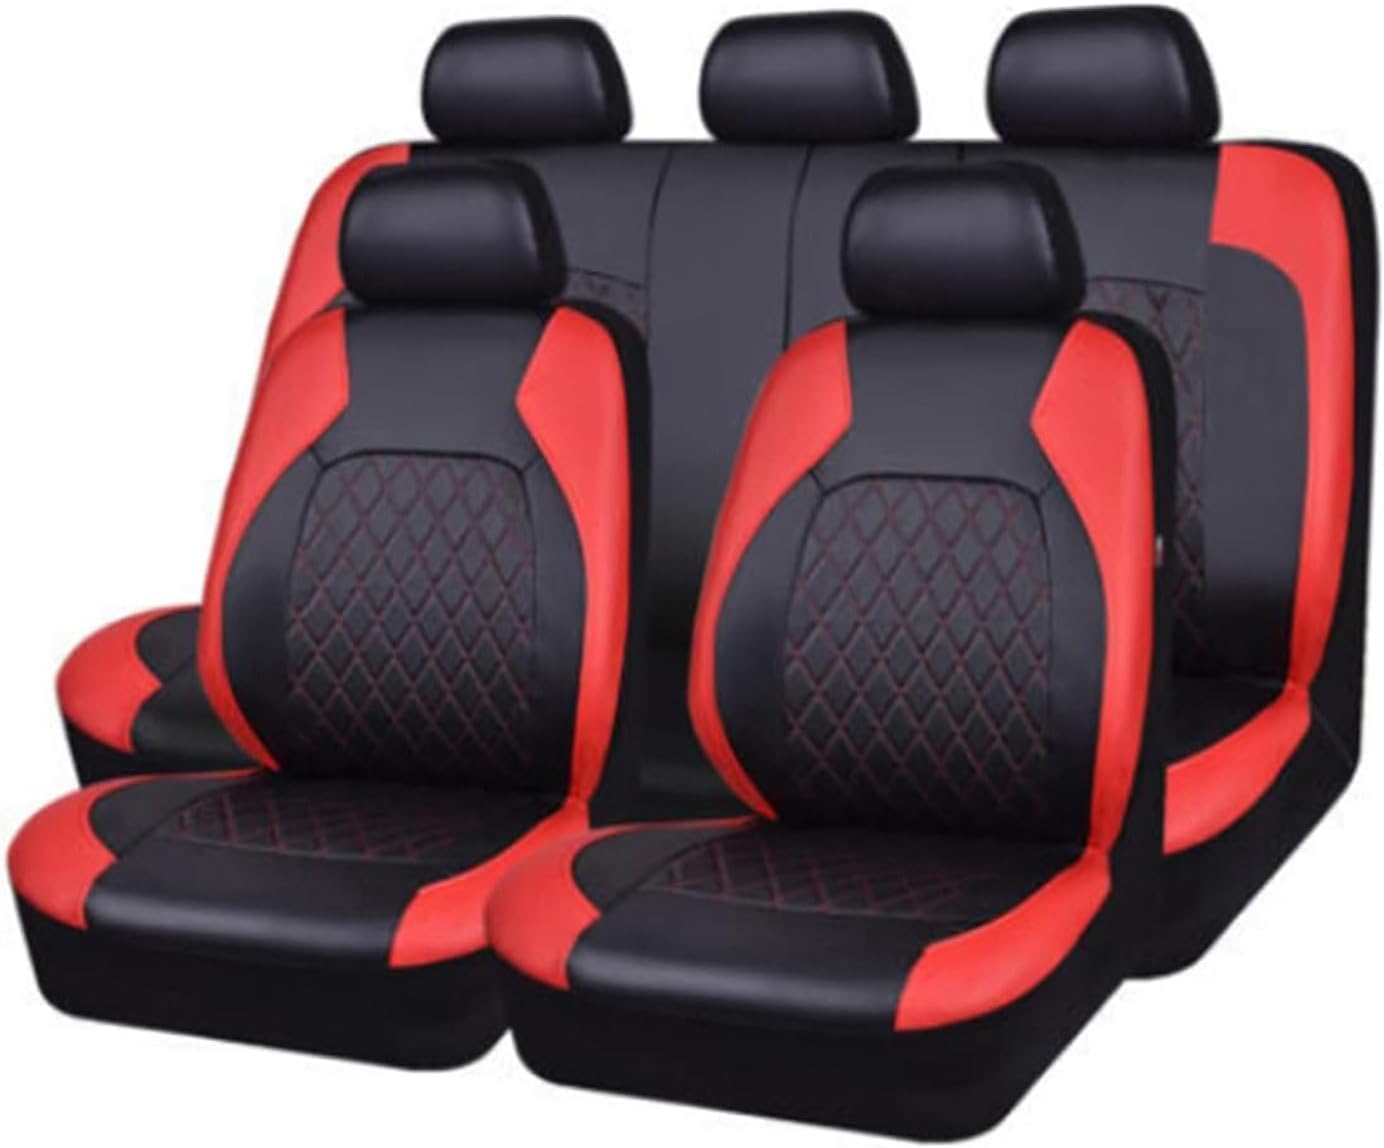 Auto Leder Sitzbezüge für BMW E46 E90 E39 E60 E36 G30 E30 E34 E38 E53 E83, 9 Stück Allwetter Wasserdicht rutschfest Atmungsaktiv Schonbezug Set Sitzkissenschutz,C-Red von LEMAS